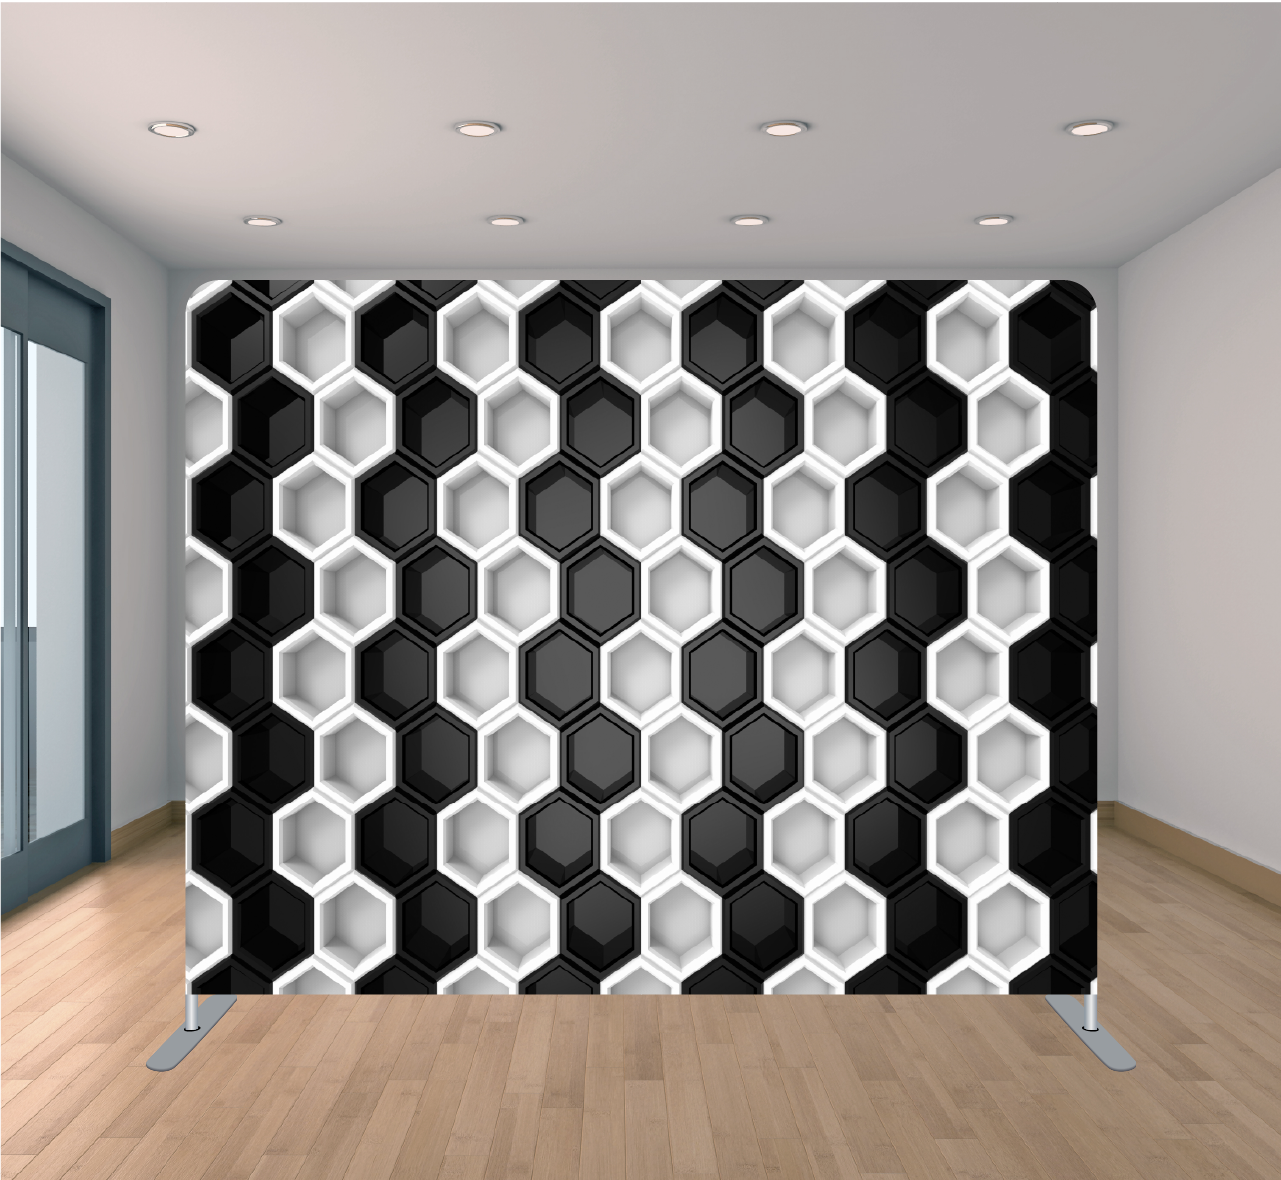 8X8 Pillowcase Tension Backdrop- Black and White Hexagonal